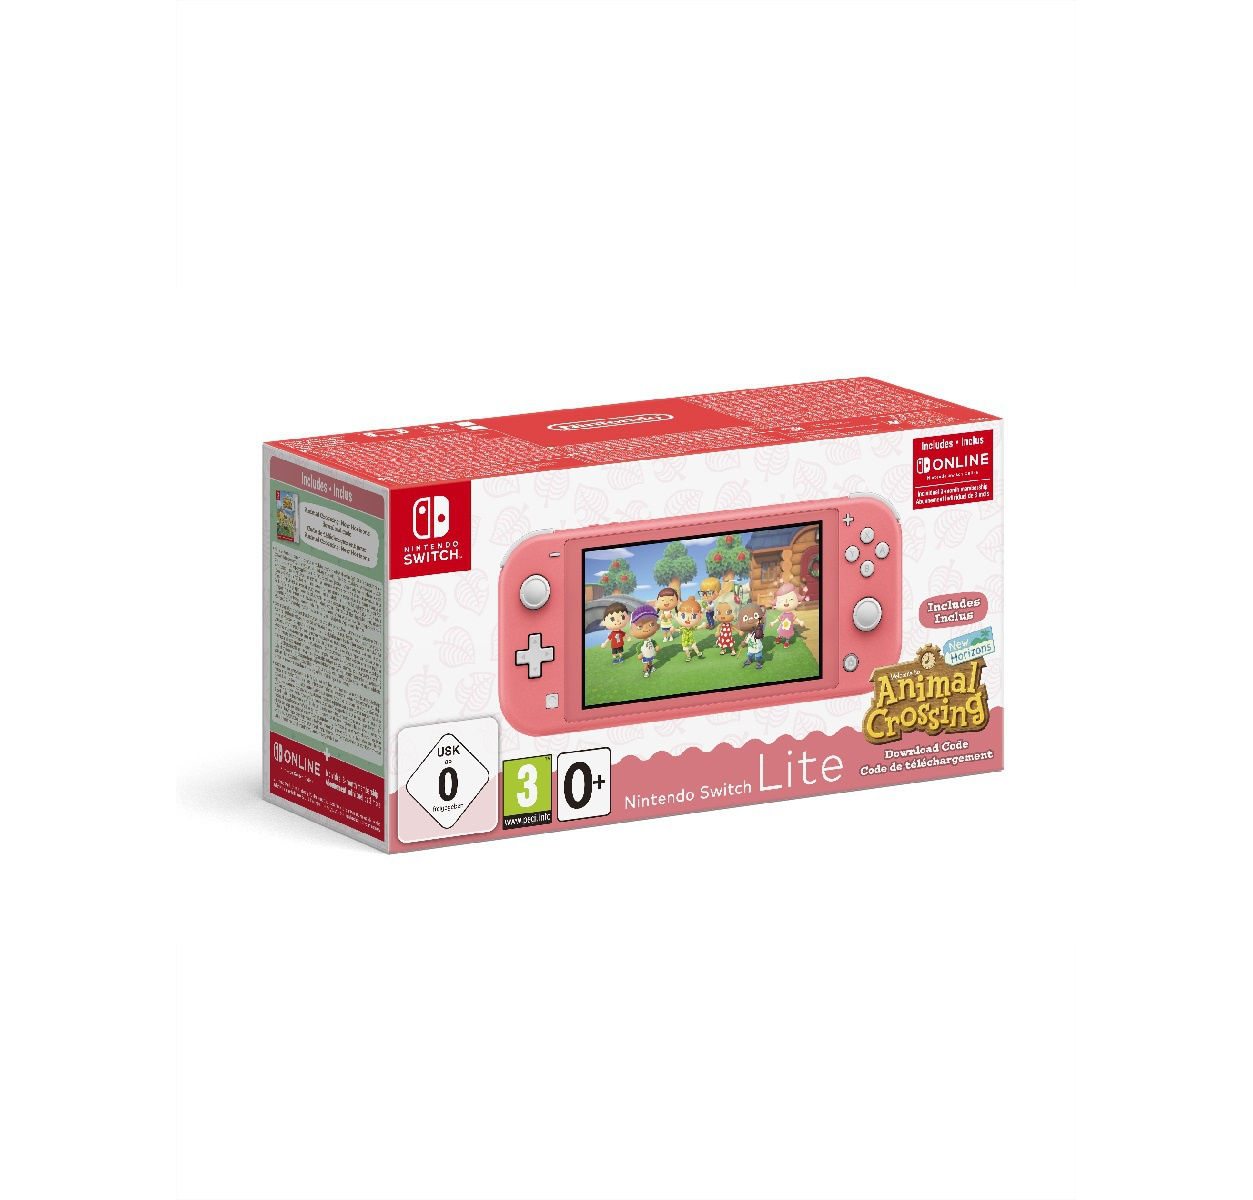  Nintendo Switch Lite и код загрузки Animal Crossing: New Horizons и NSO 3мес